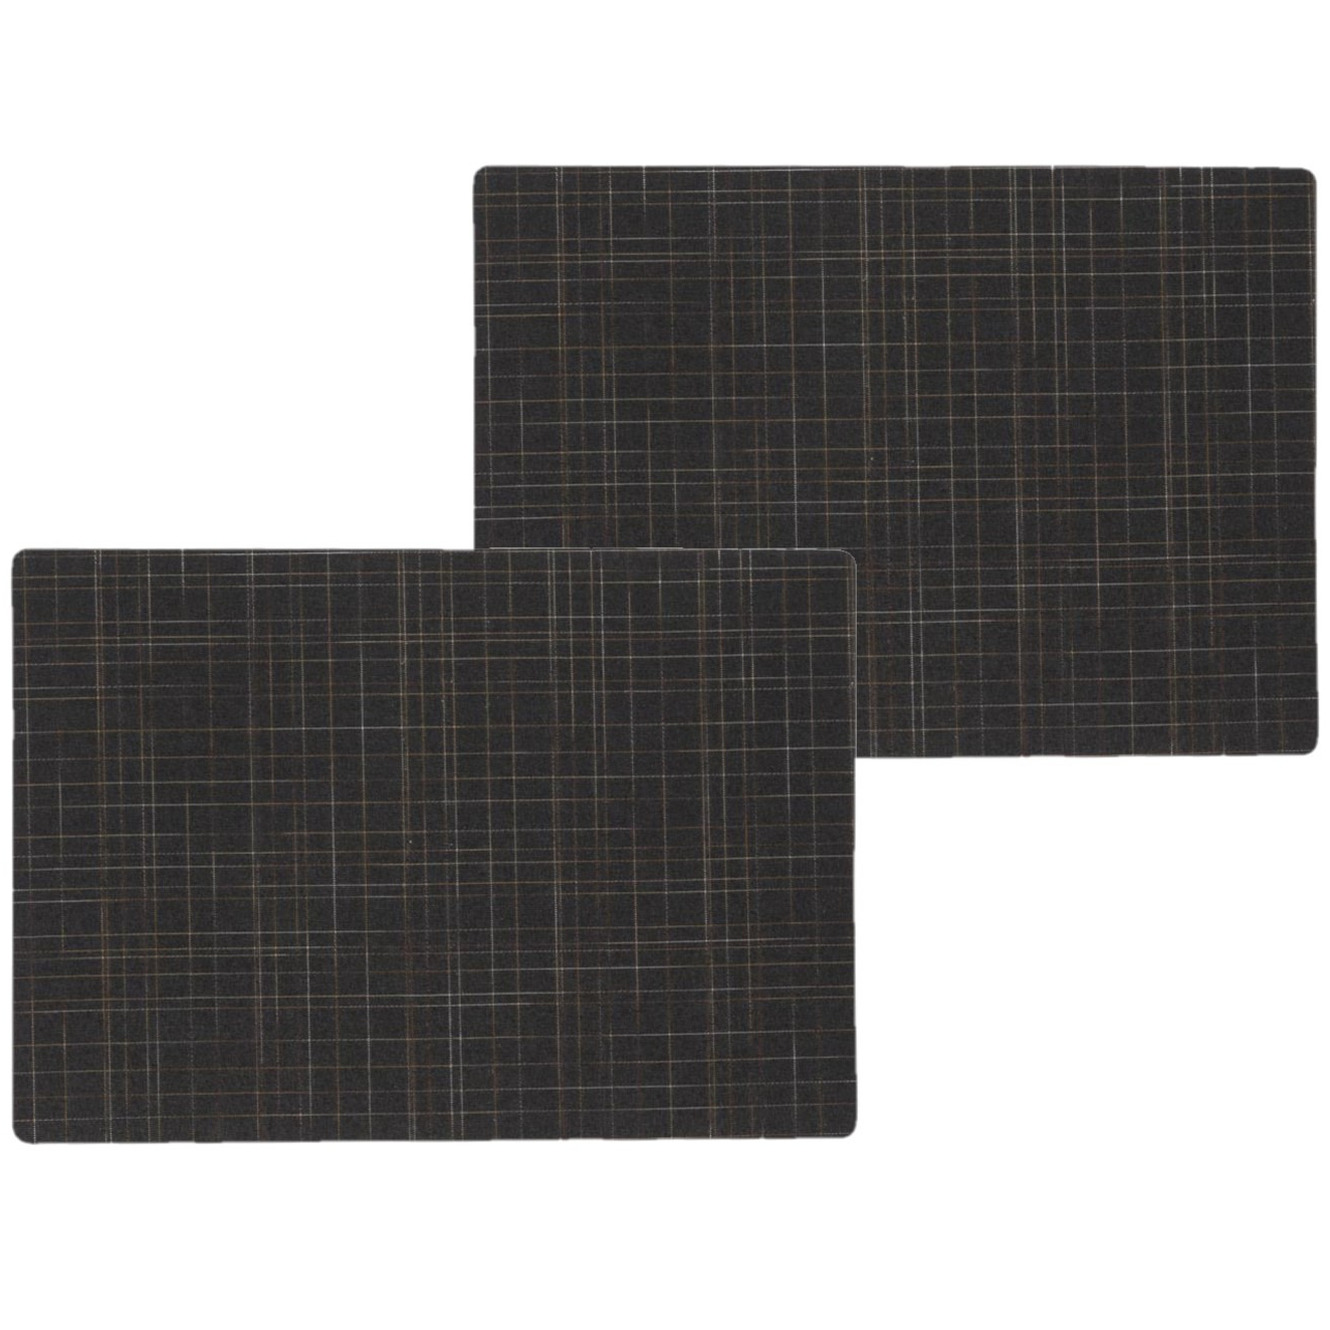 Wicotex 8x stuks stevige luxe Tafel placemats Liso zwart 30 x 43 cm -